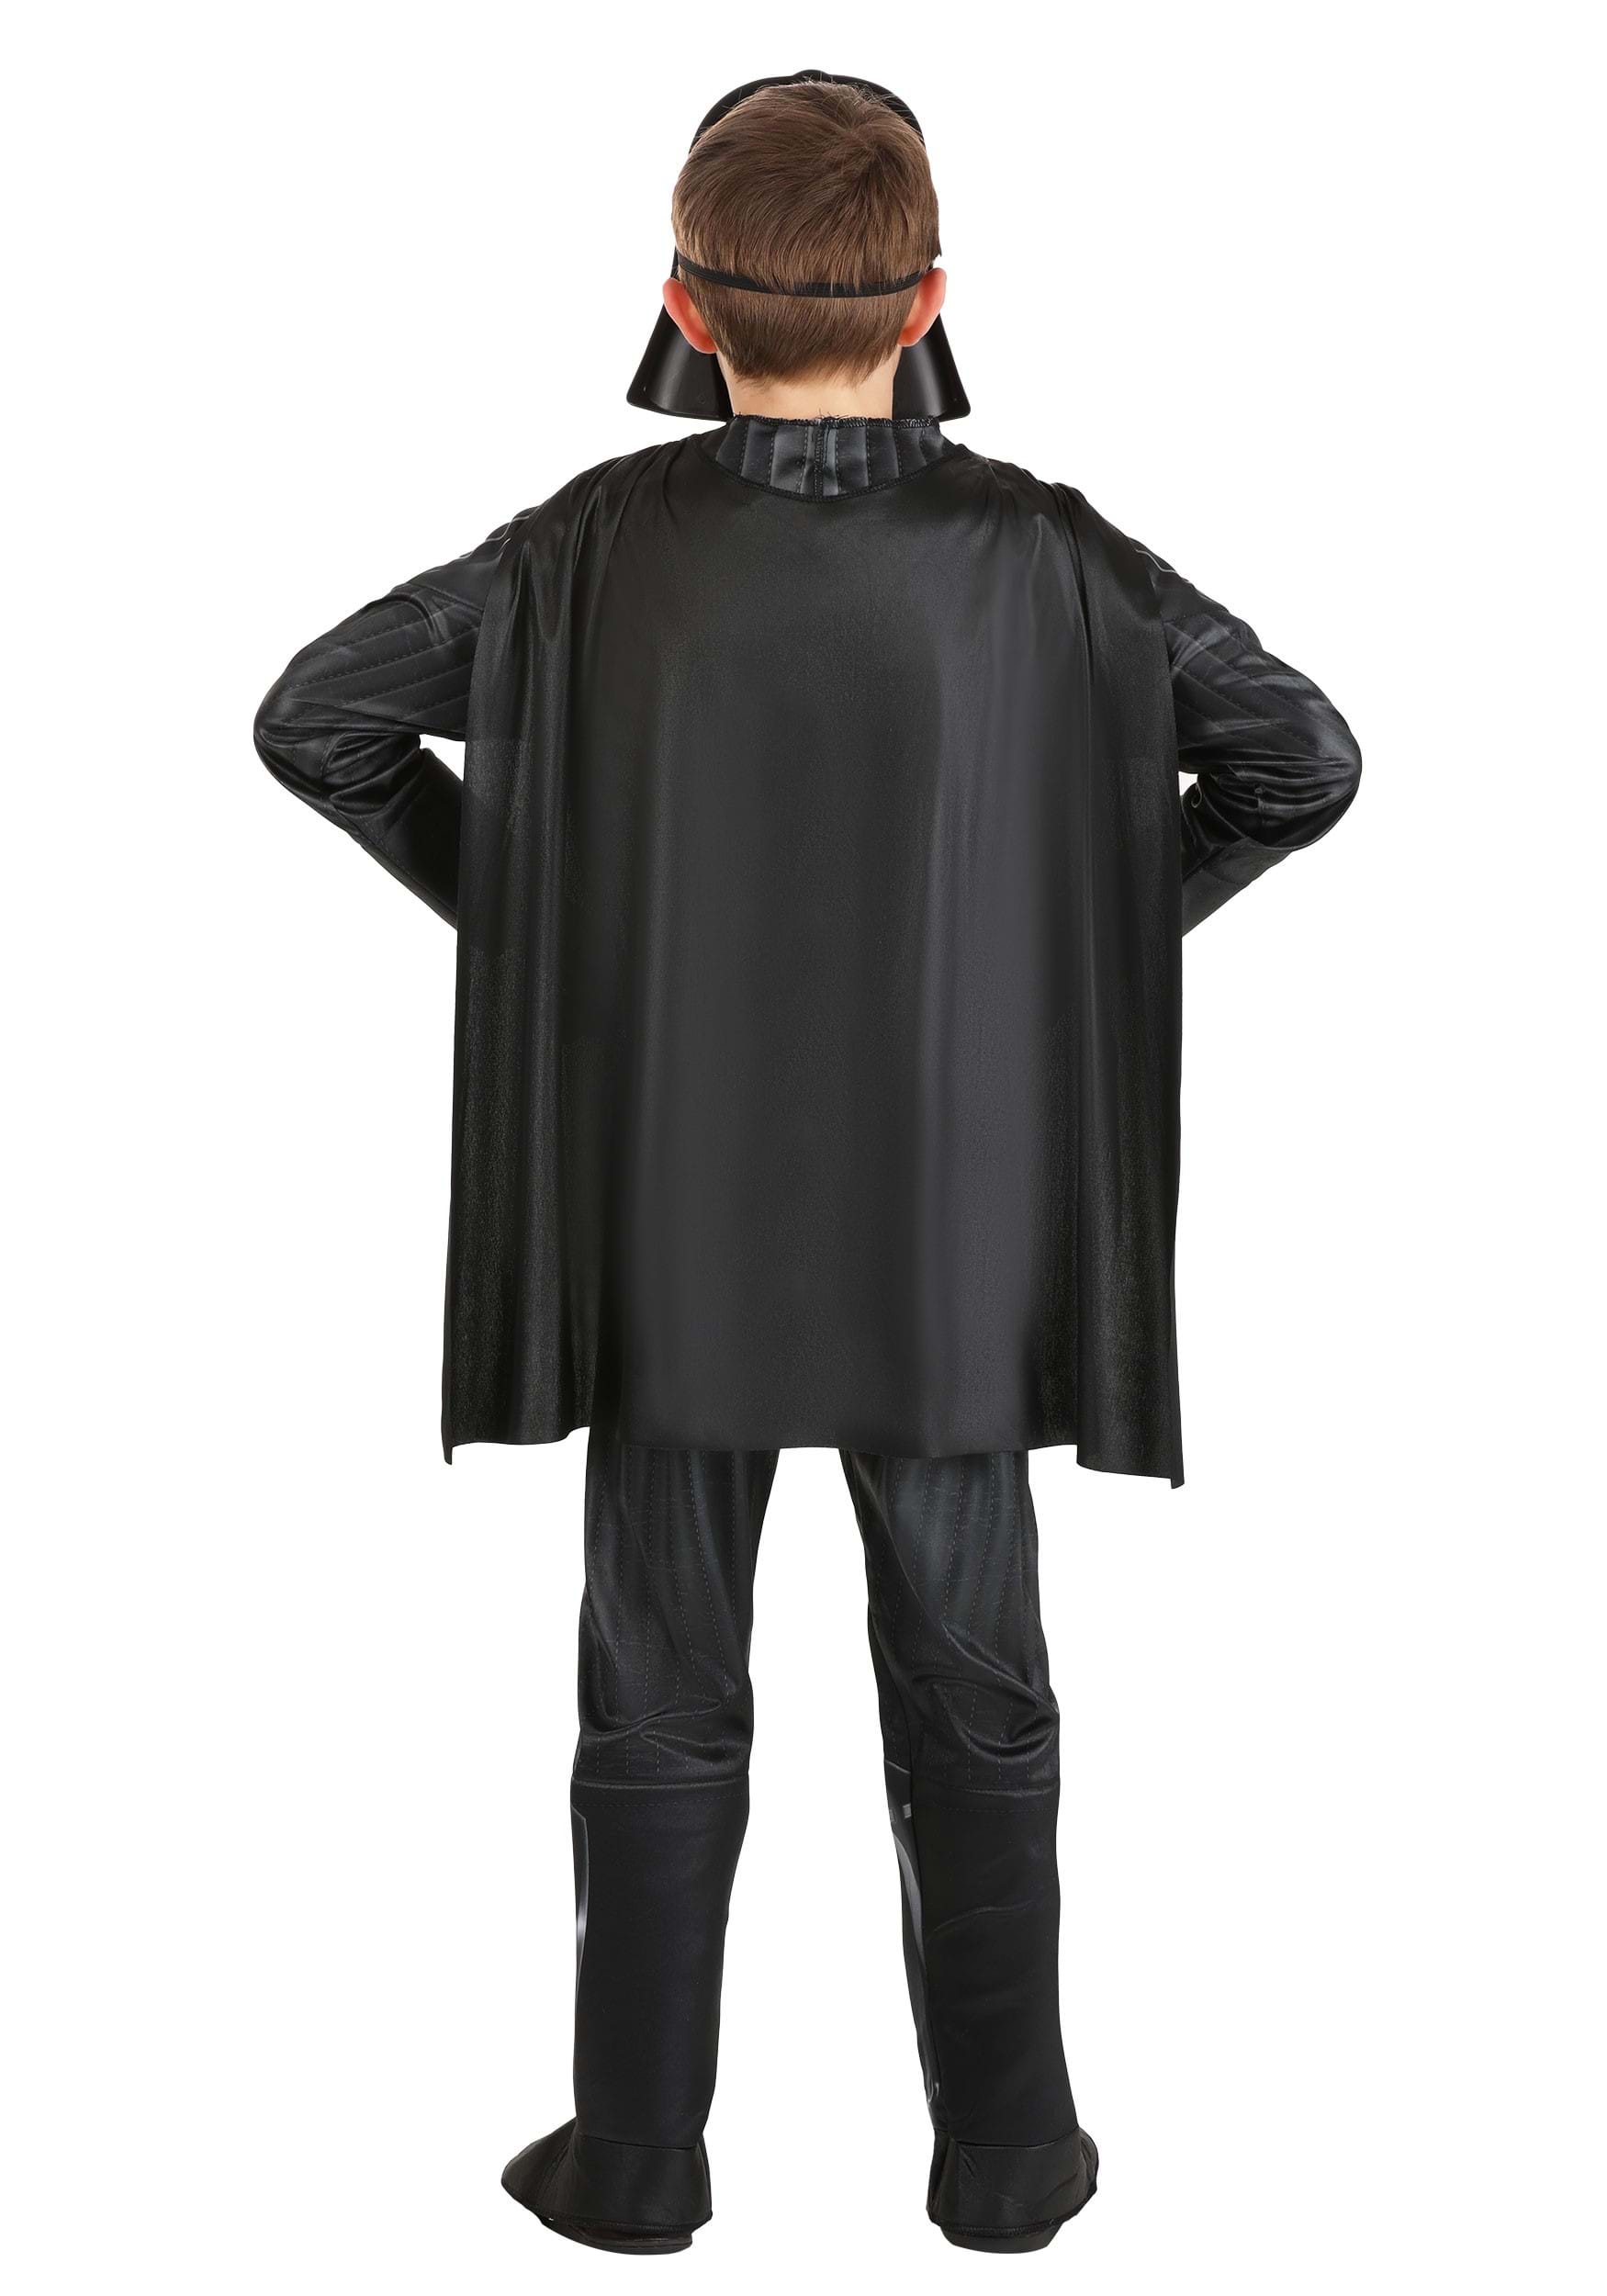 Darth Vader Kid's Costume